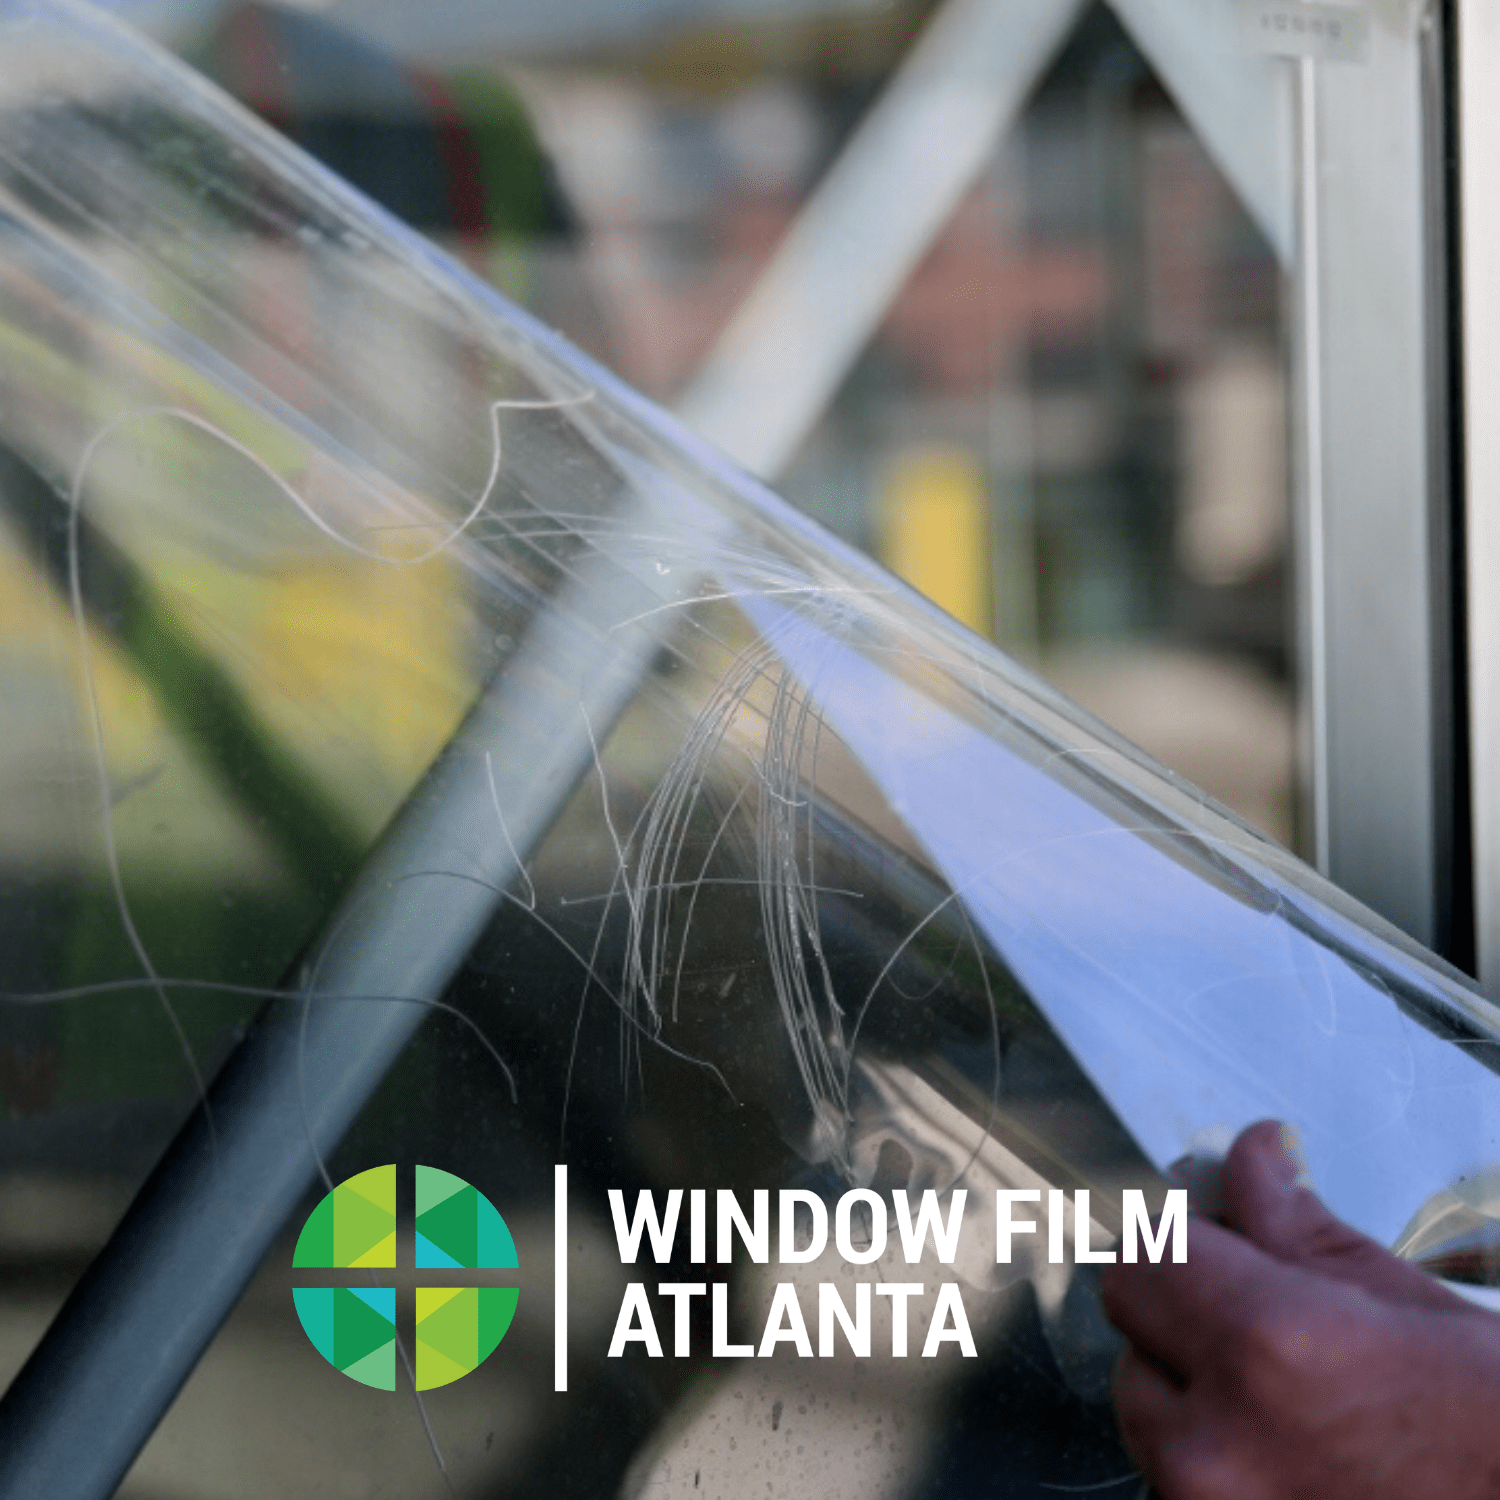 window film installation company atlanta